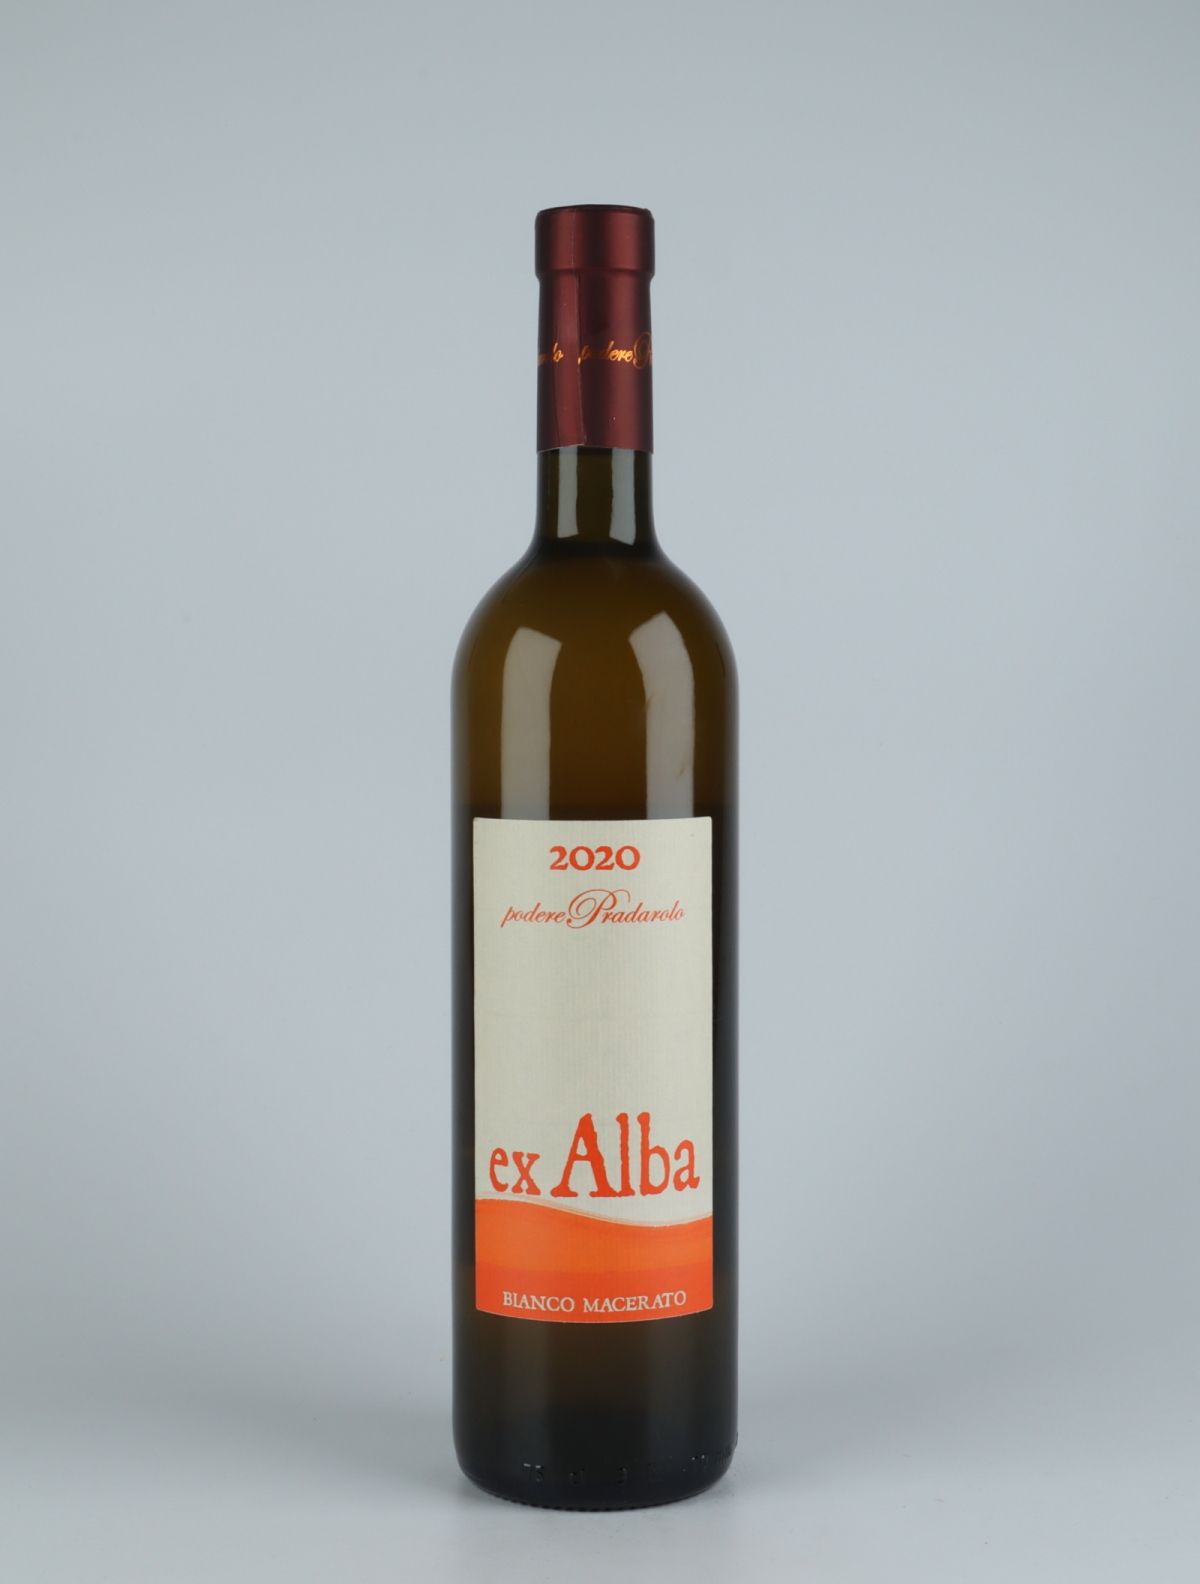 En flaske 2020 Ex Alba Orange vin fra Podere Pradarolo, Emilia-Romagna i Italien